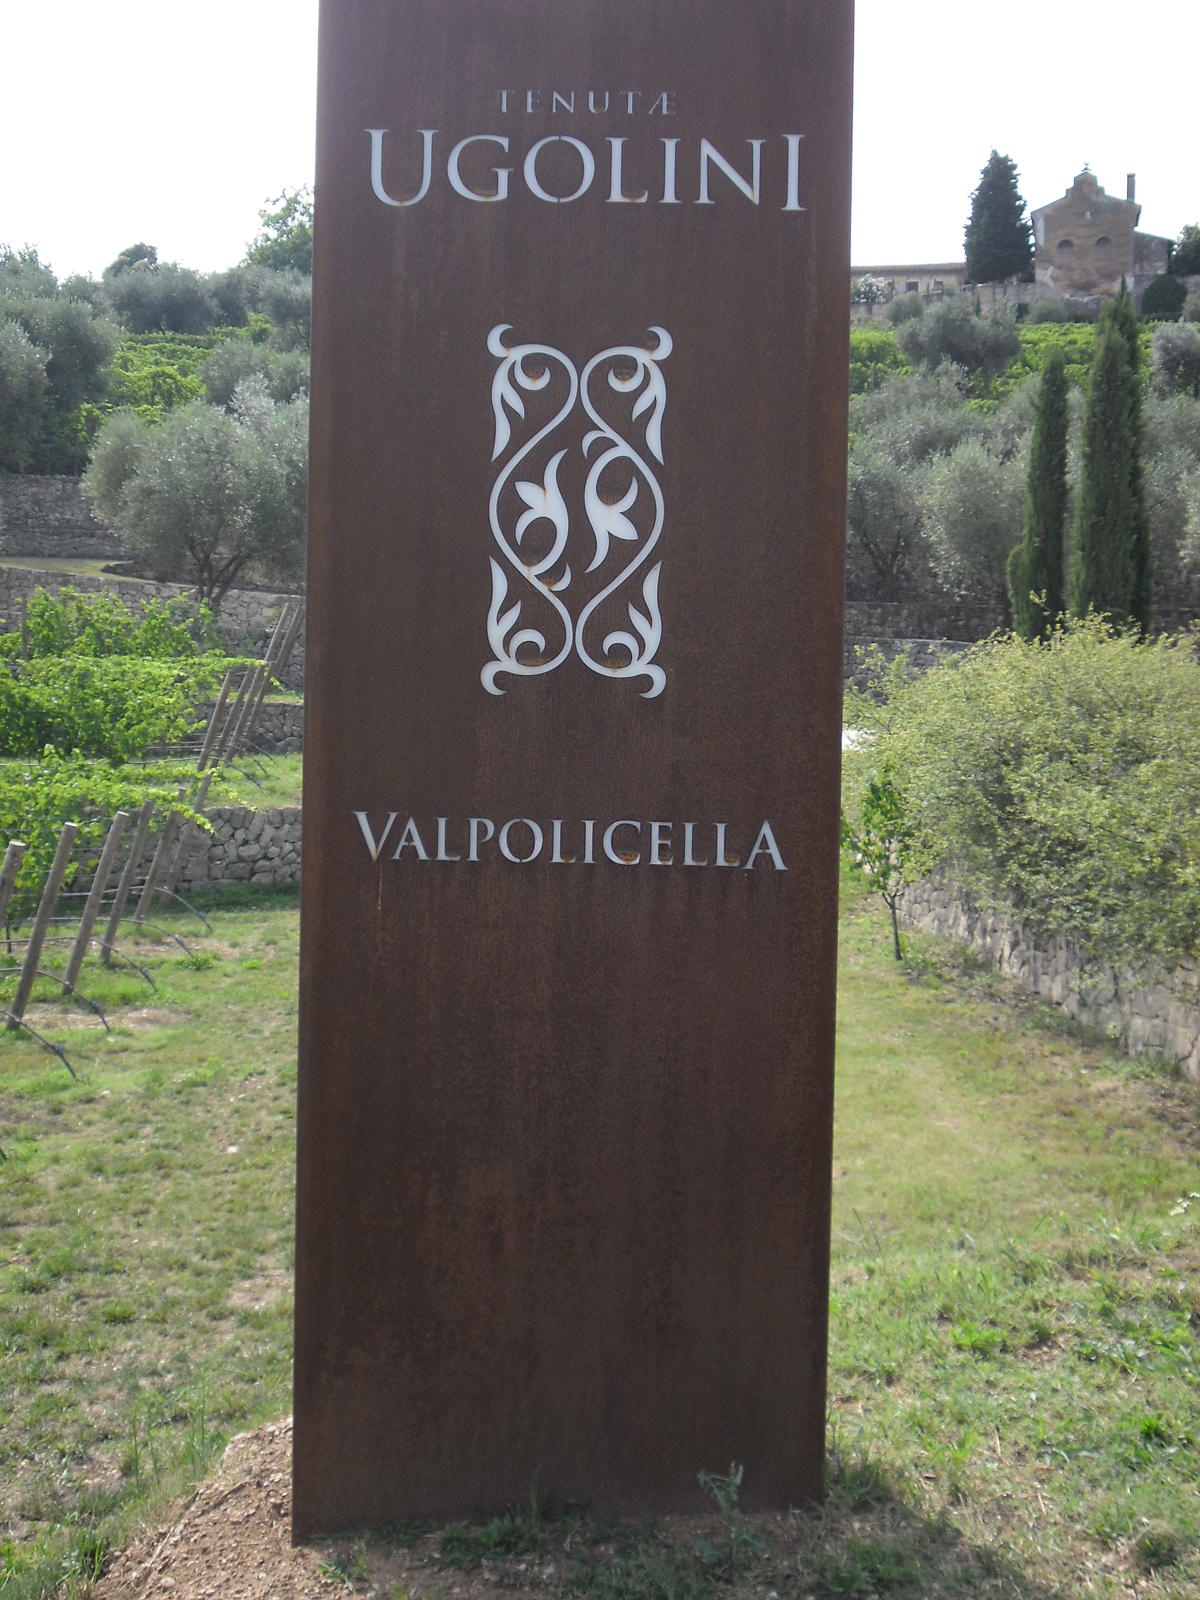 Ugolini vineyard for wine tasting